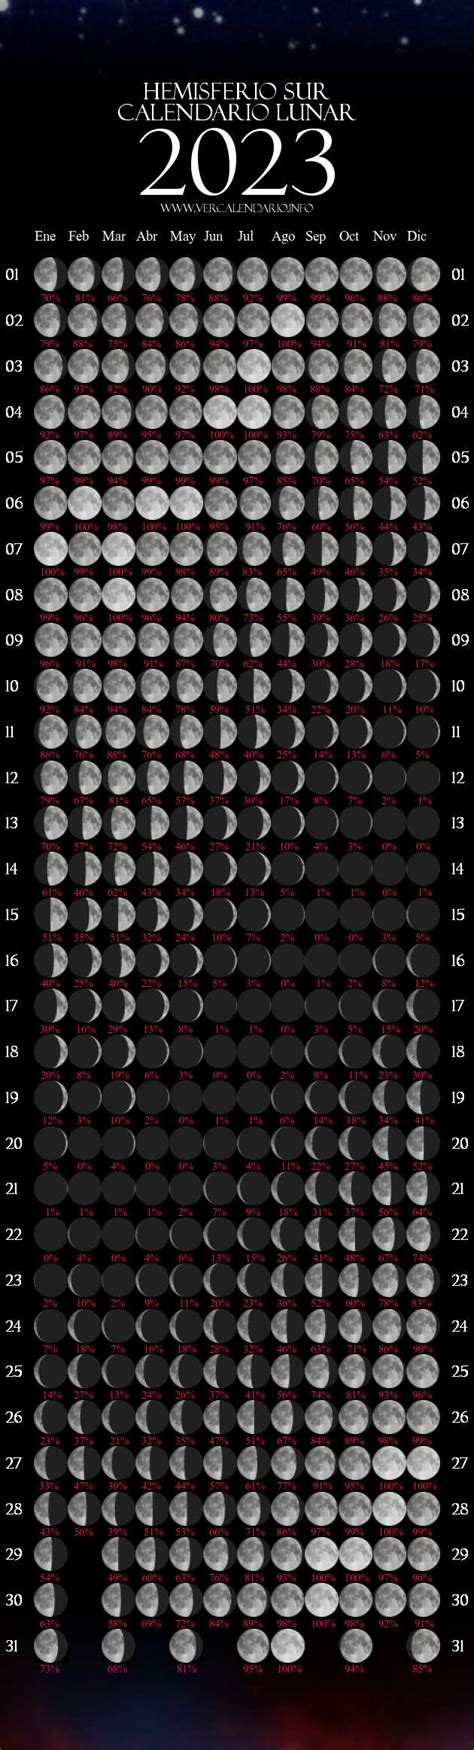 Fases Lunares 2023 Calendario Lunar 2023 Fases Lunares Etsy M Xico